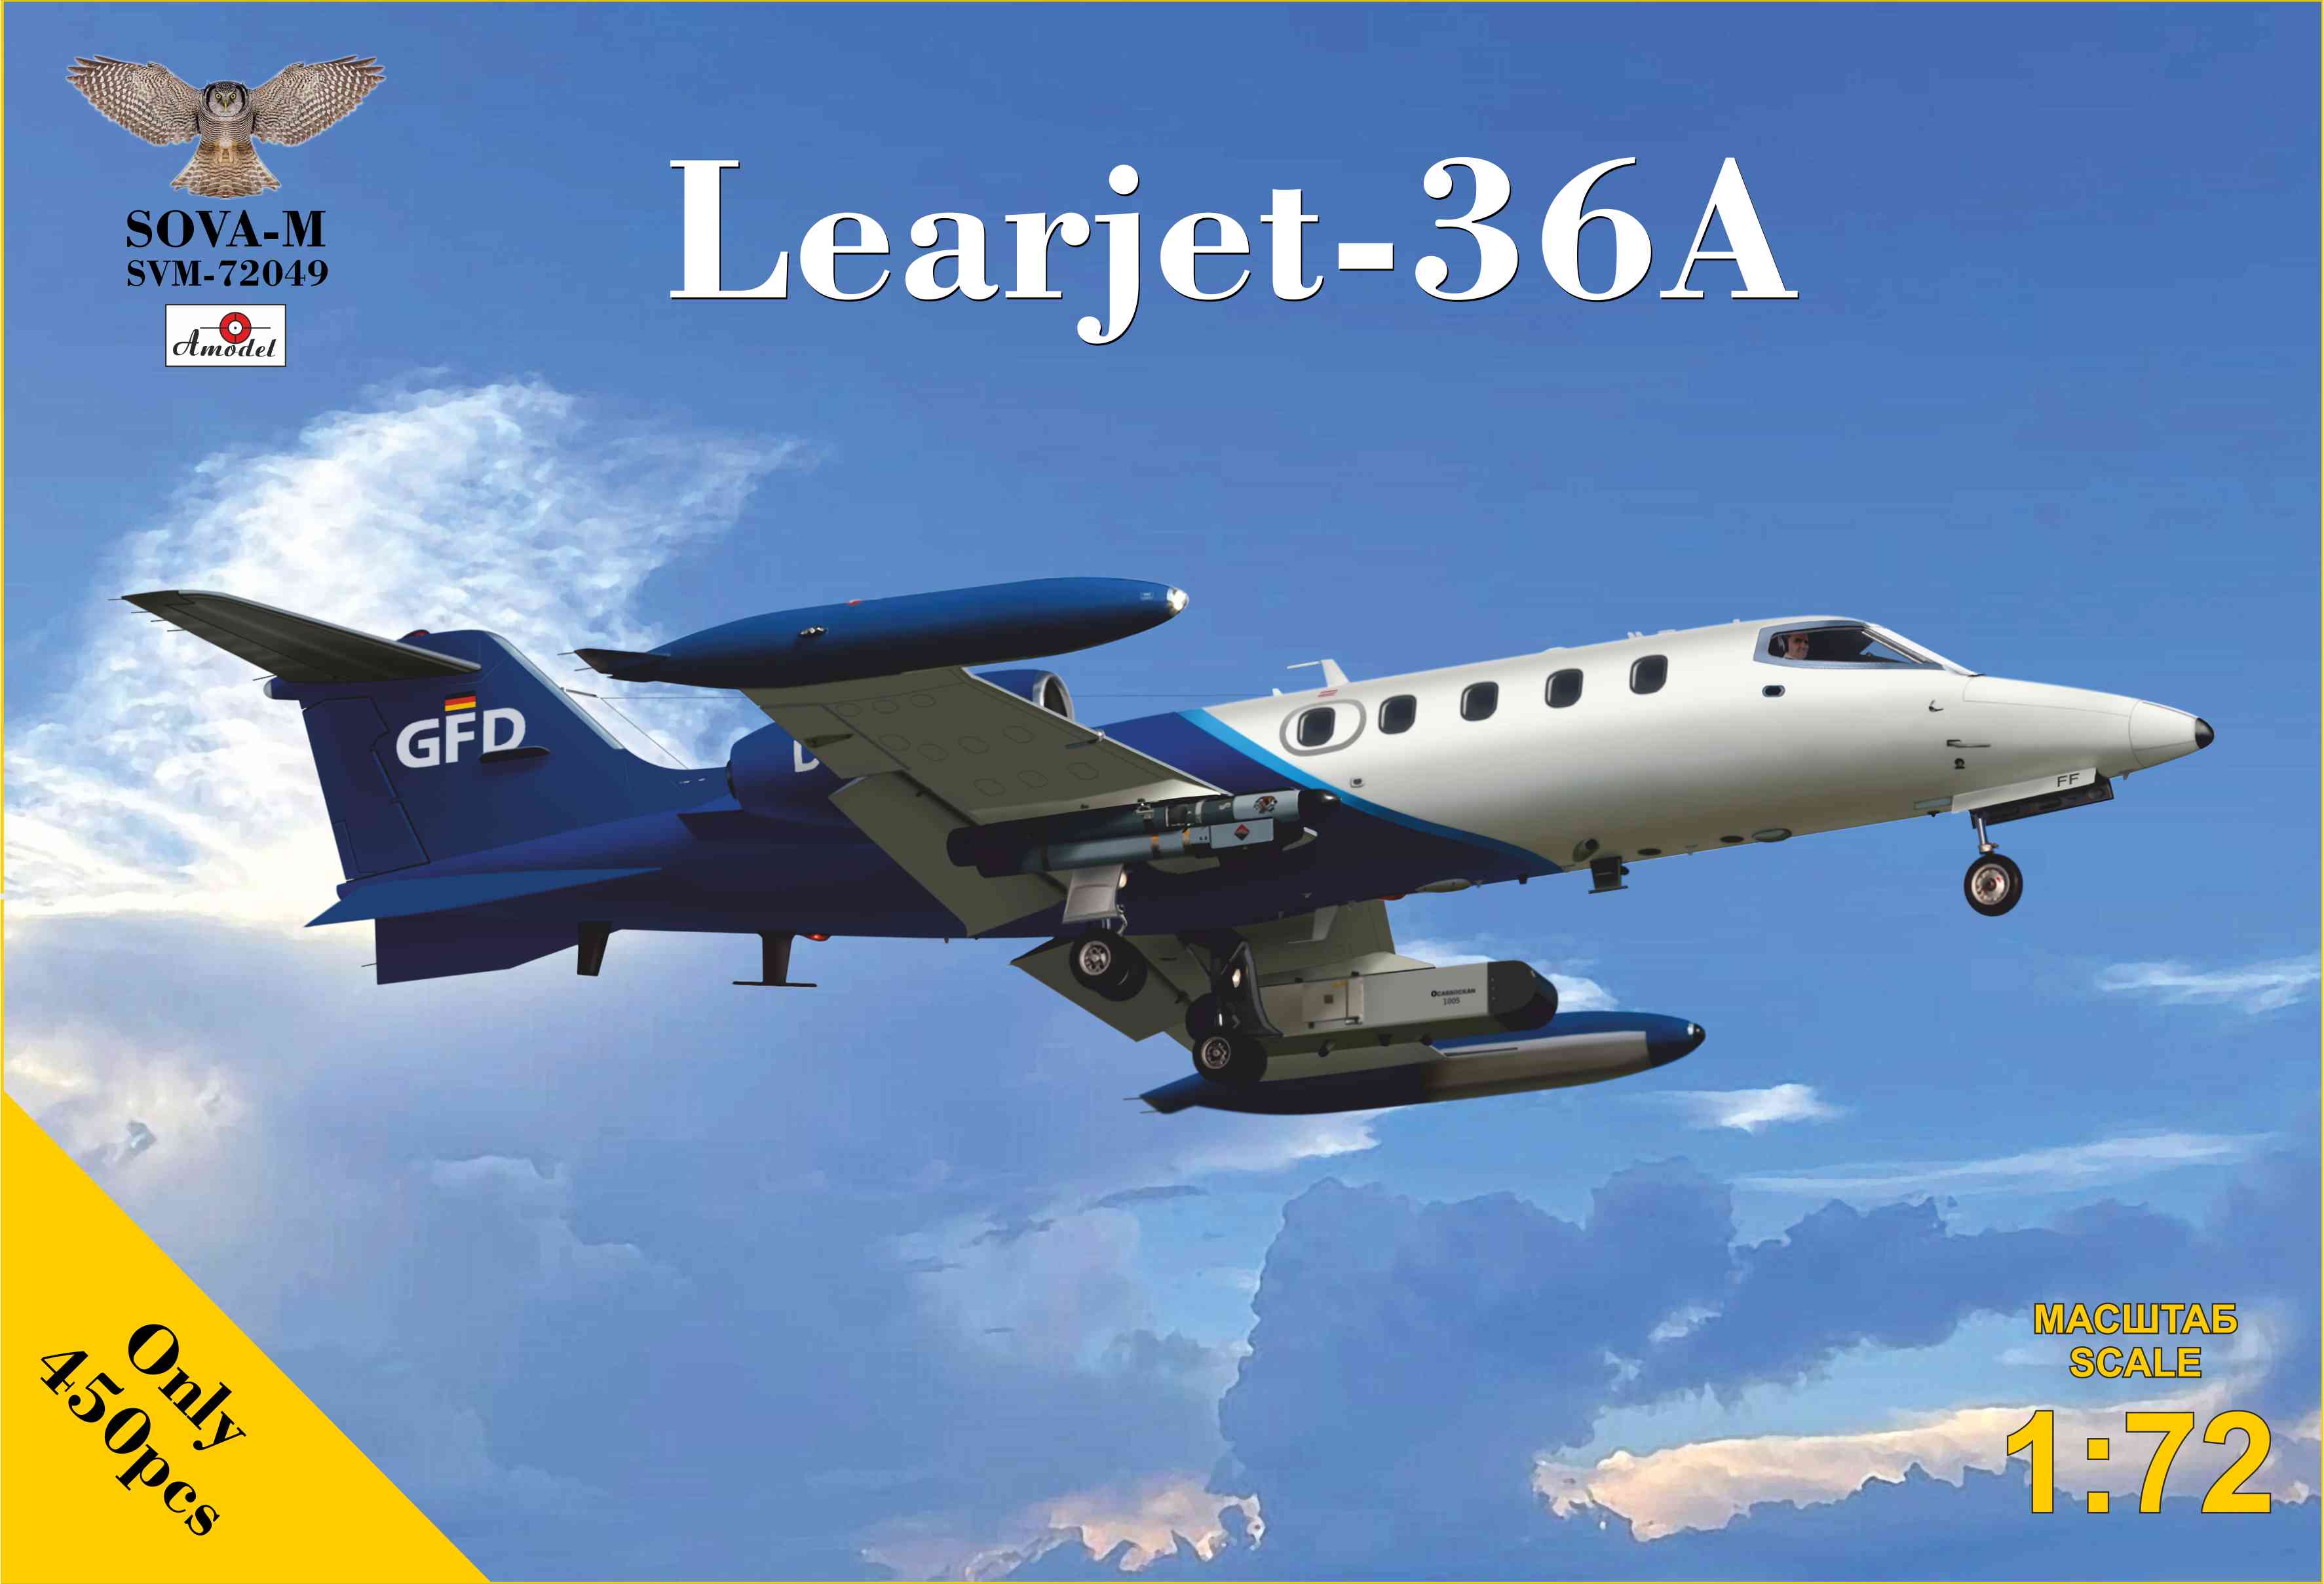 Learjet 36A with exper.radar pod - ModelSvit official web-shop